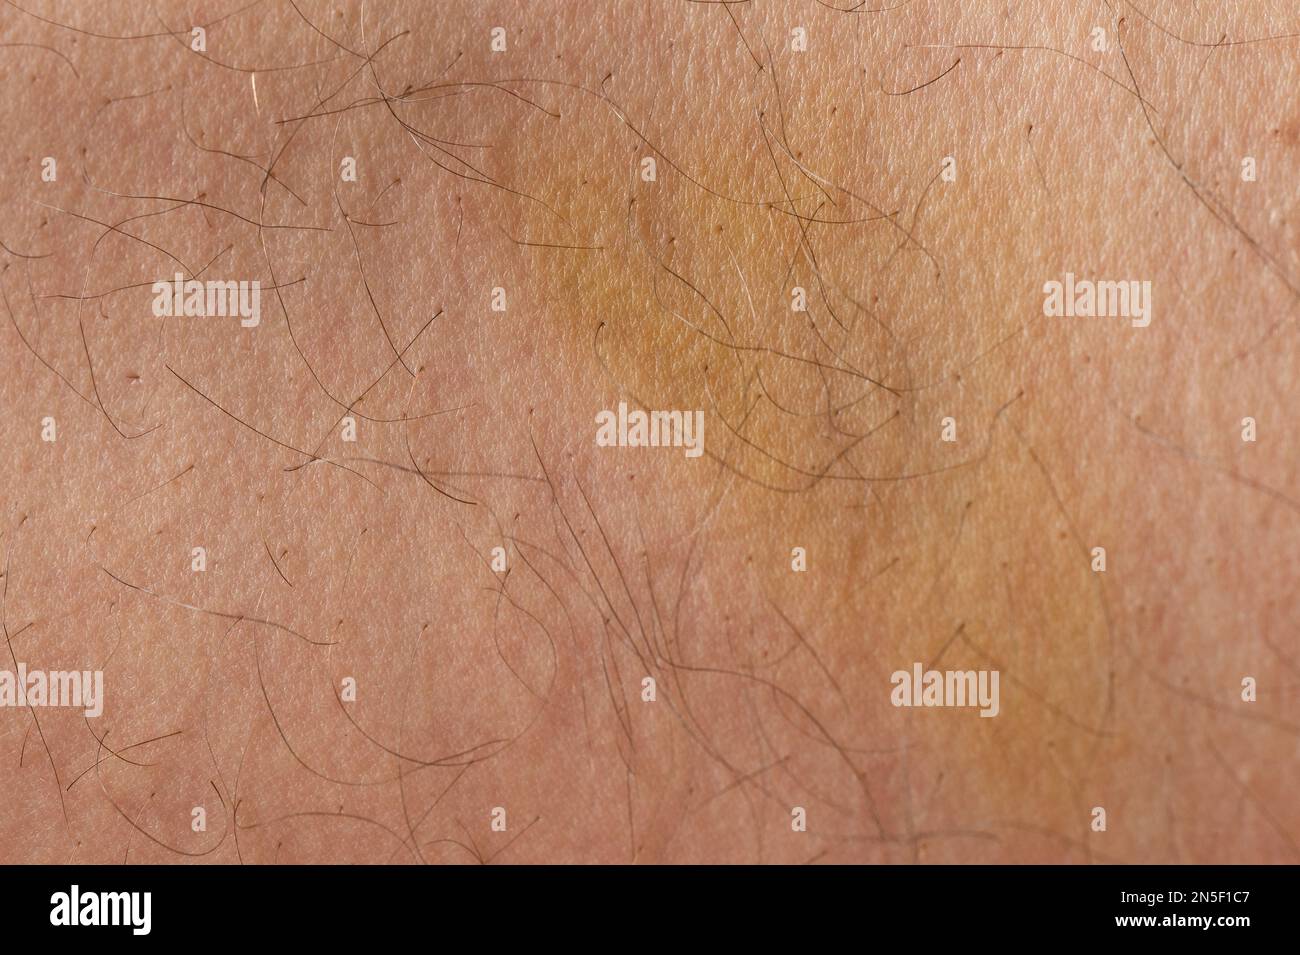 Beaten spot on human skin macro close up view Stock Photo